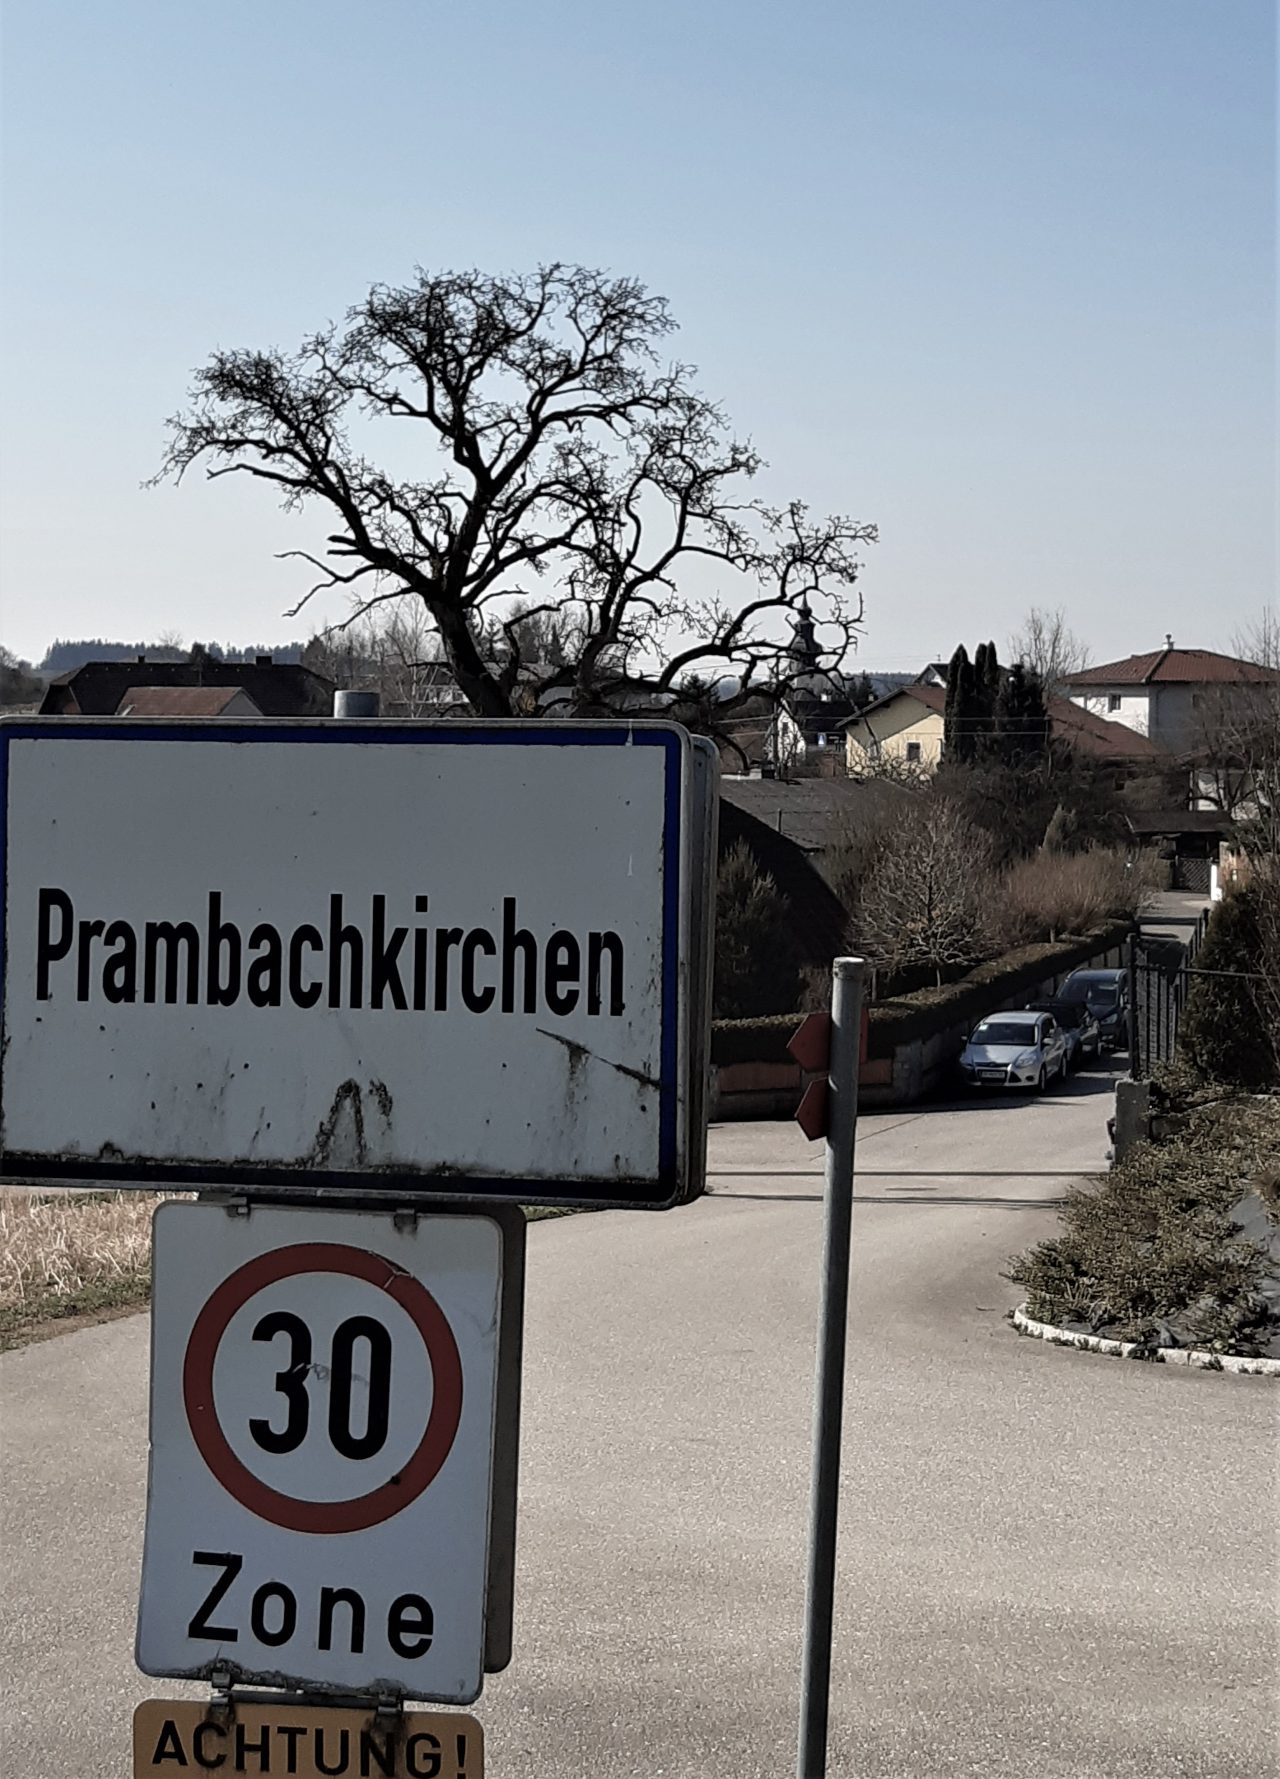 Prambachkirchen 30Zone